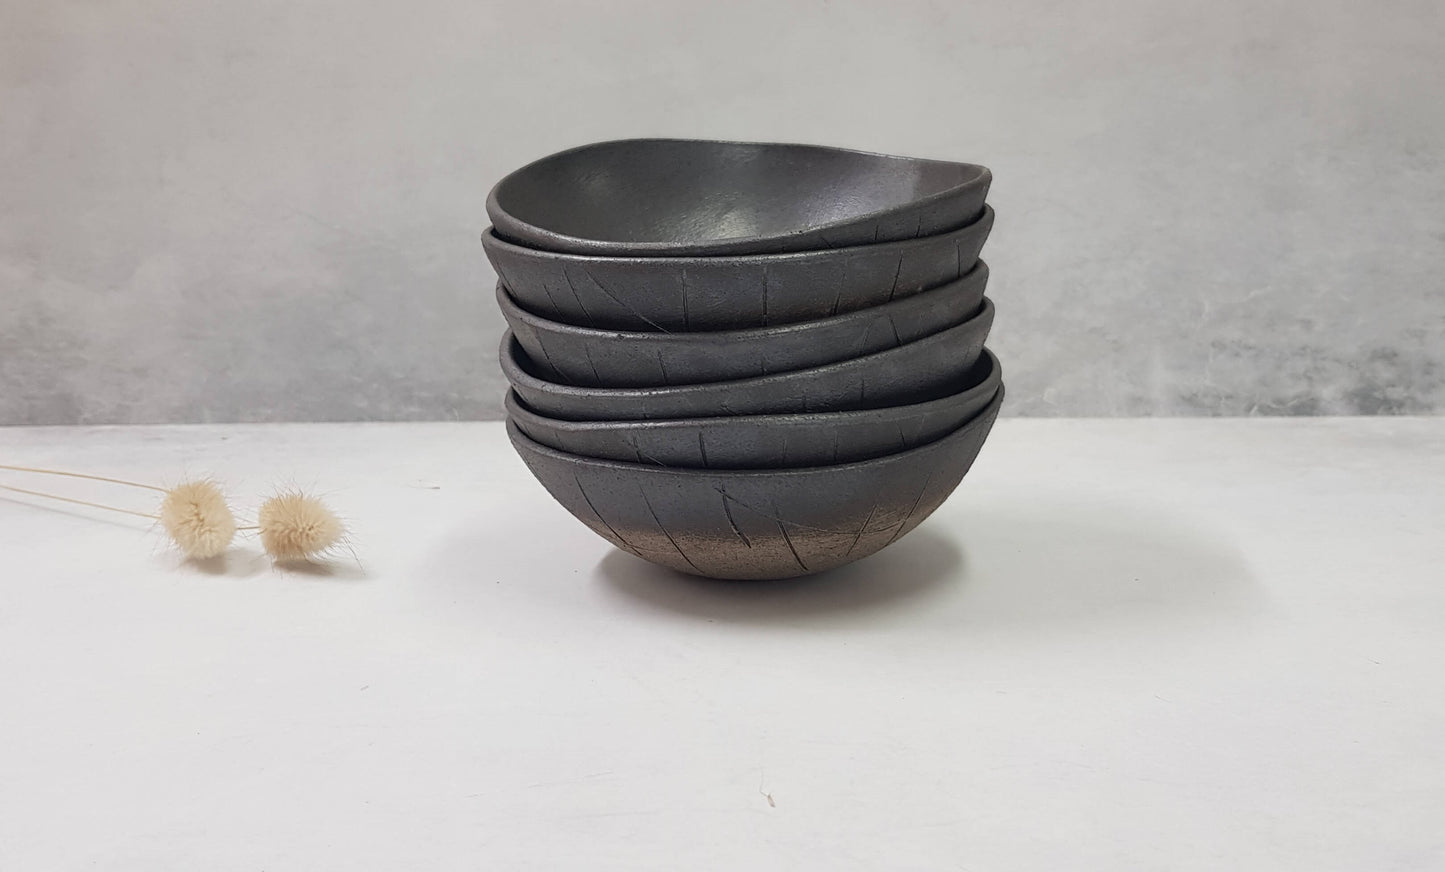 Black ceramic bowls for dips